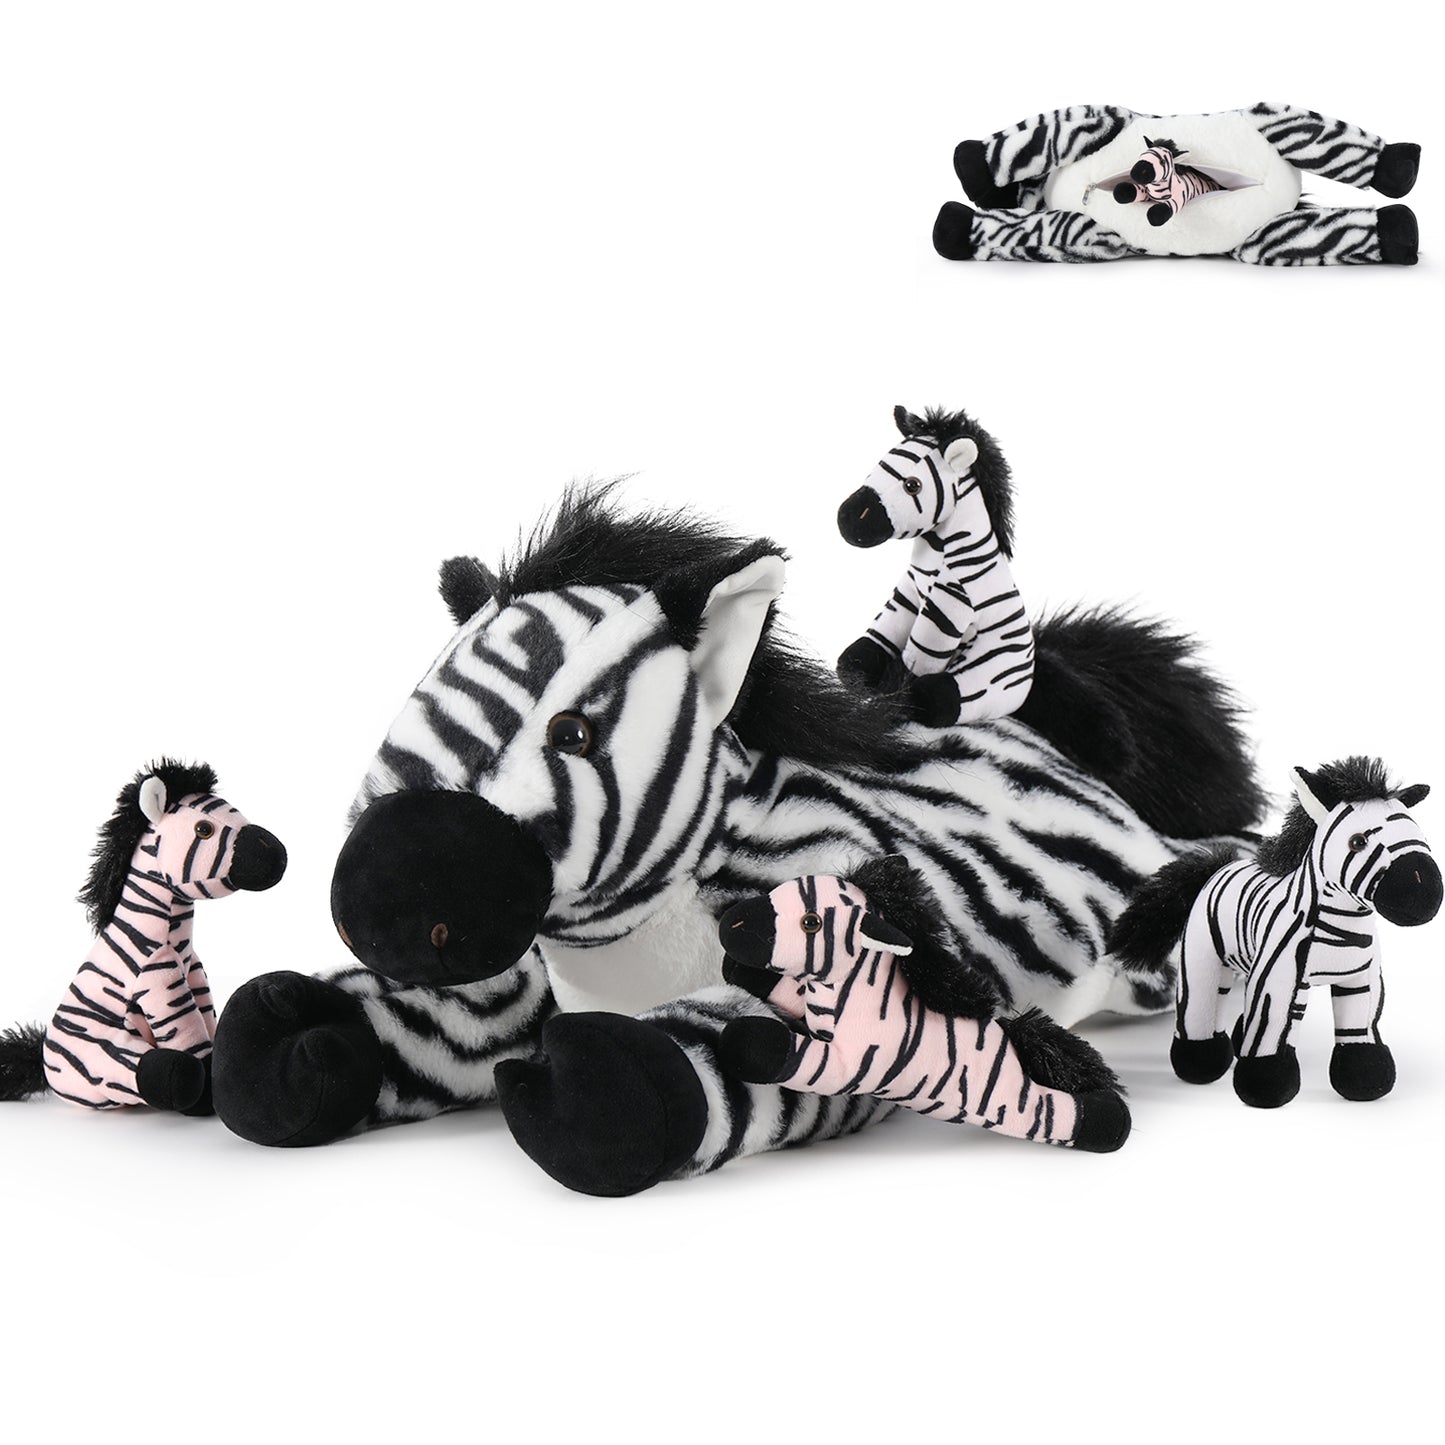 Zebra Stuffed Animal Plush Toys, 25.2 Inches - MorisMos Stuffed Animals